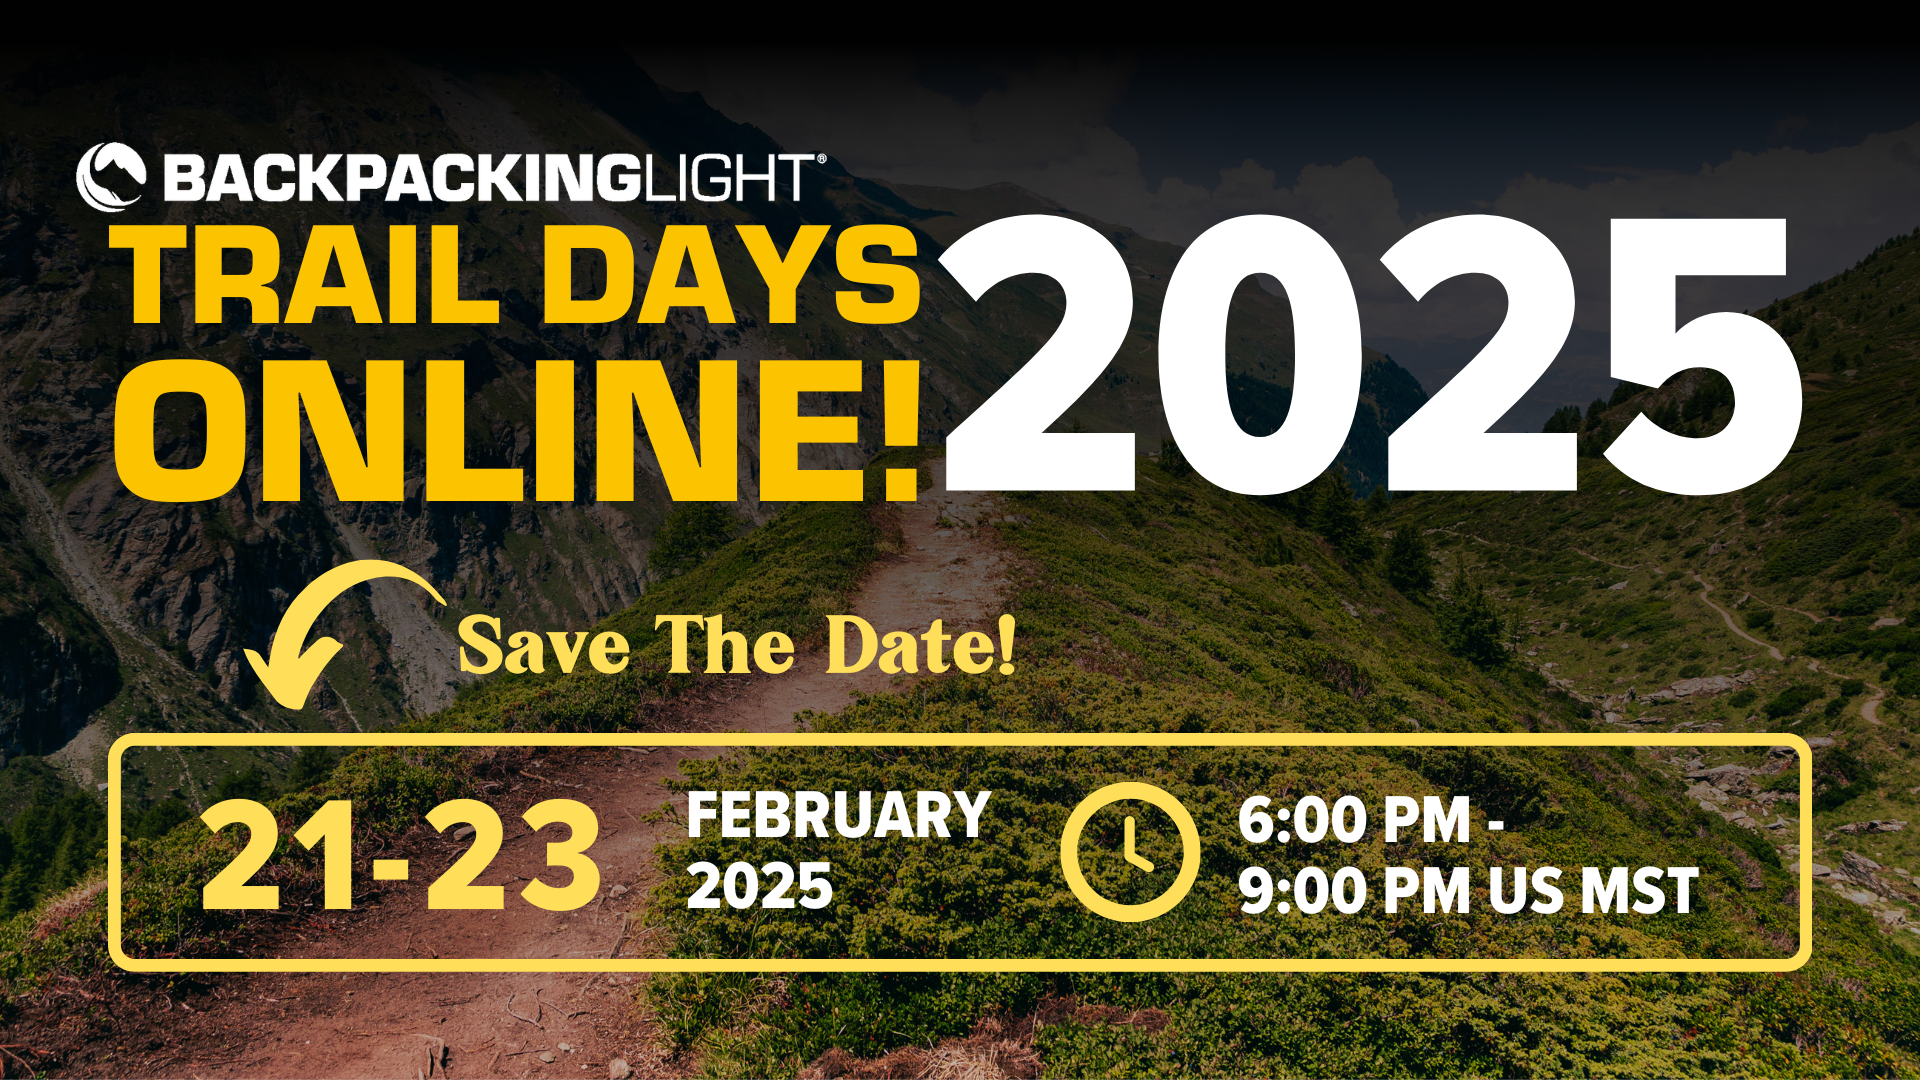 backpacking light trail days online 2025 - february 21-23, 2025